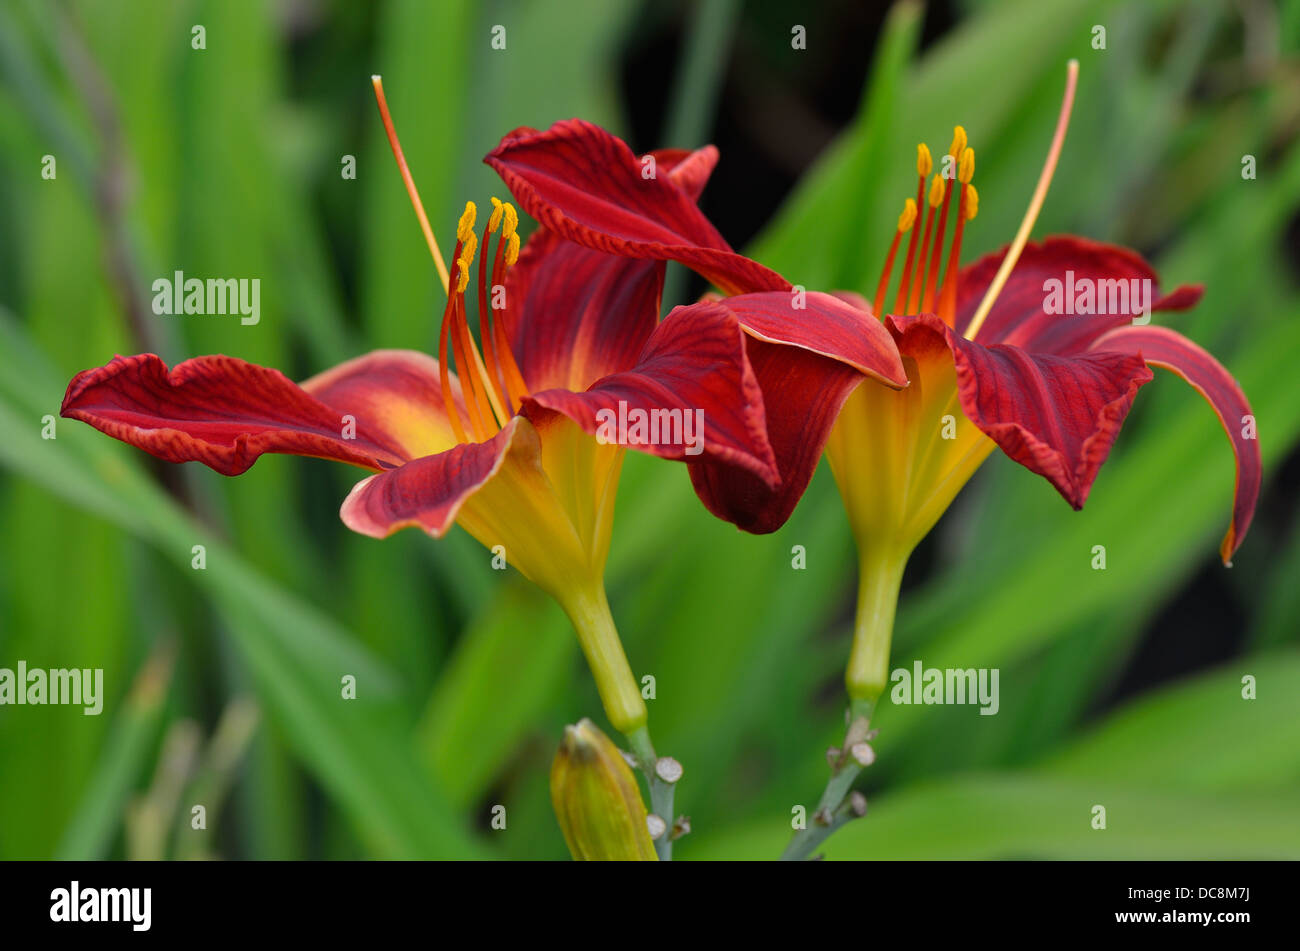 Two red lily flowers Hemerocallis Stock Photo